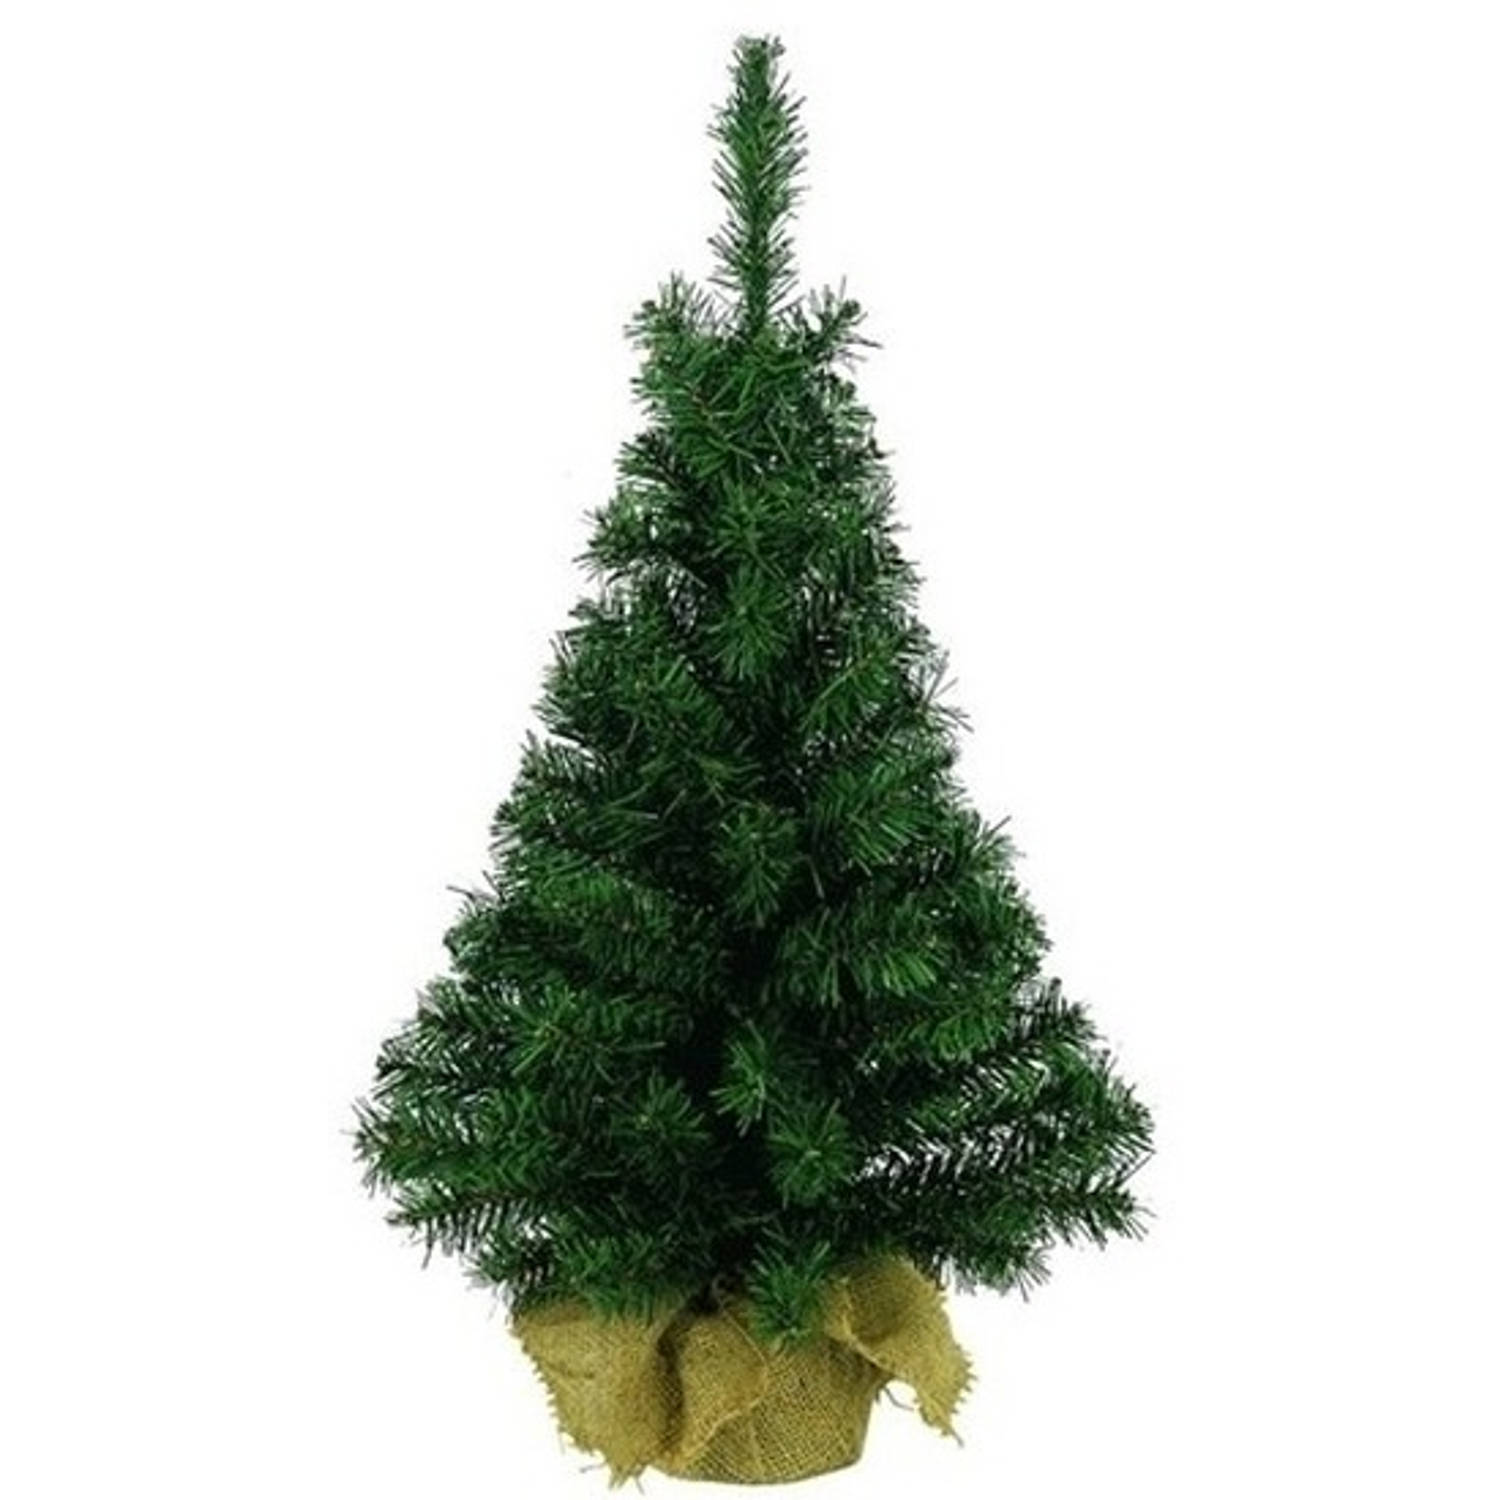 Kunst kerstboom groen jute zak 45 cm - | Blokker